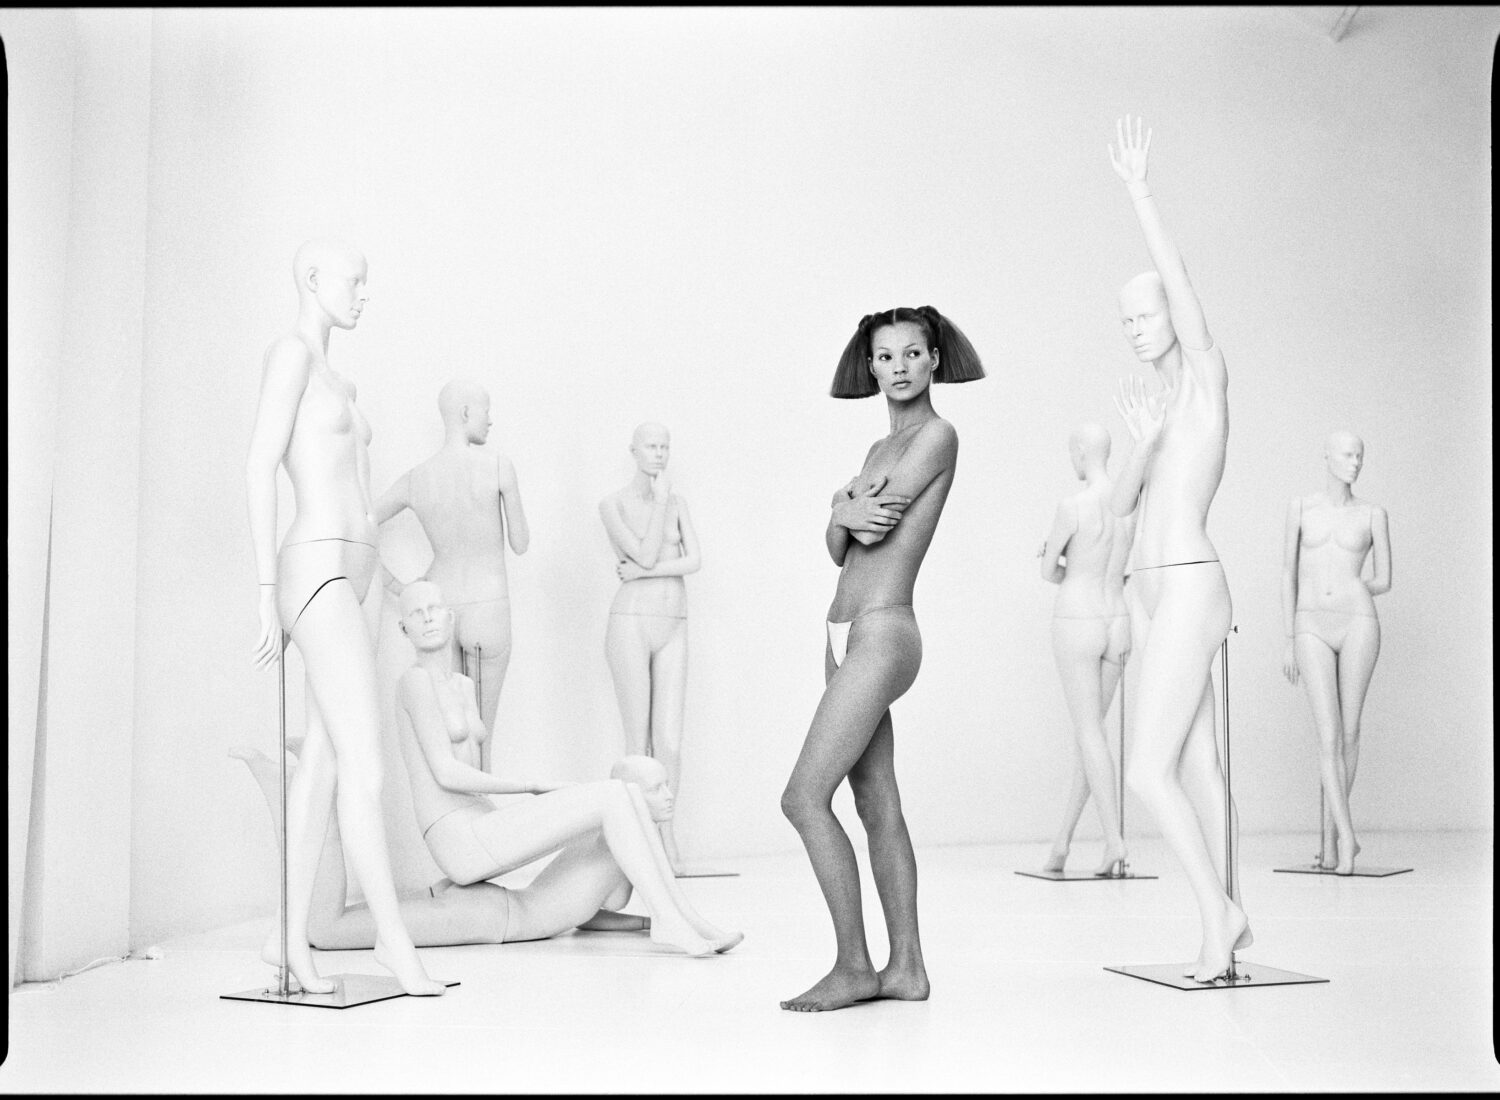 Patrick Demarchelier: Kate and Mannequins